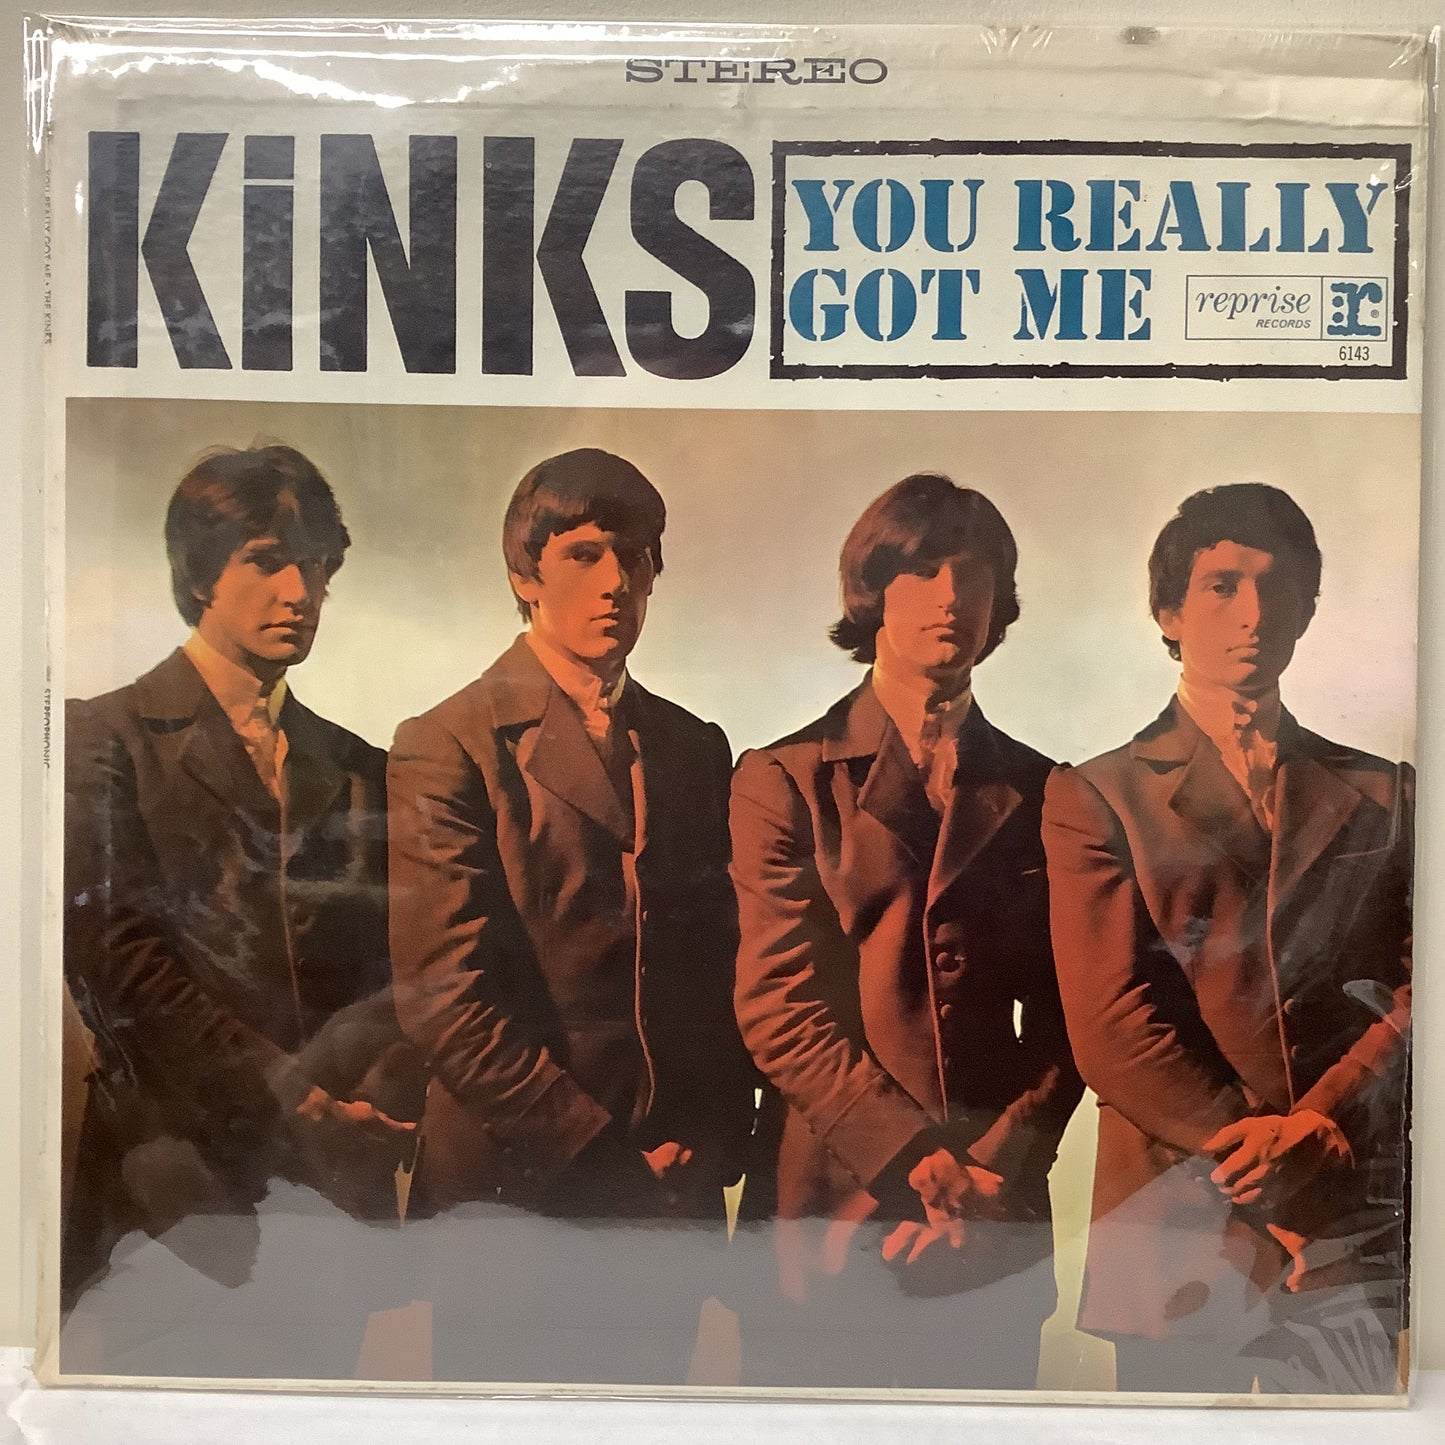 The Kinks - Realmente me tienes - Reprise LP